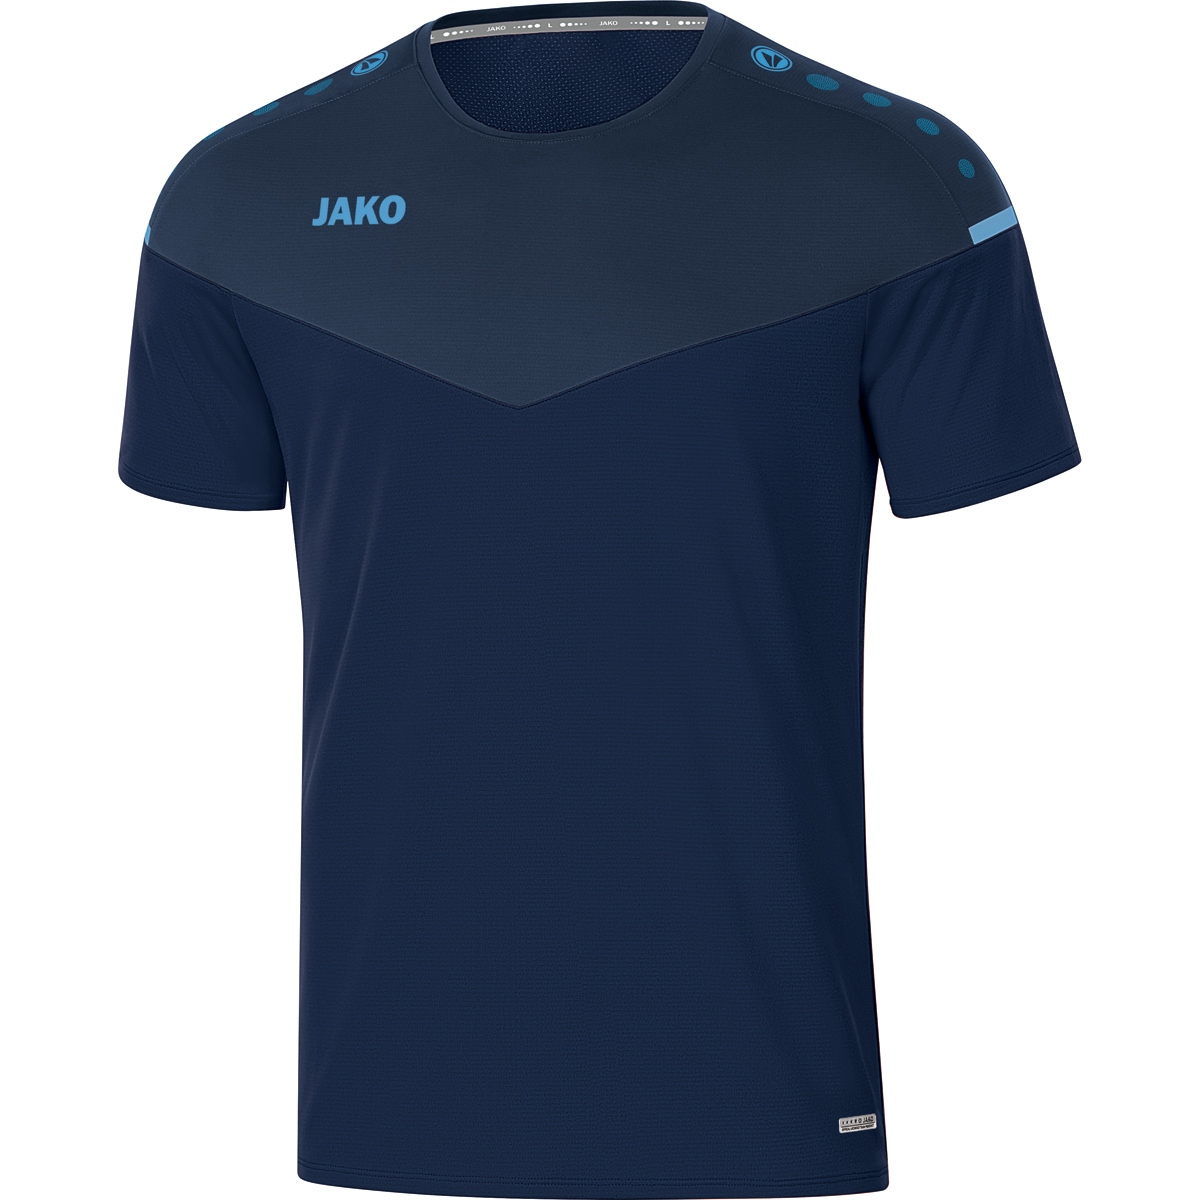 JAKO T-Shirt 2.0 Herren, S, 6120 Champ marine/darkblue/skyblue, Gr